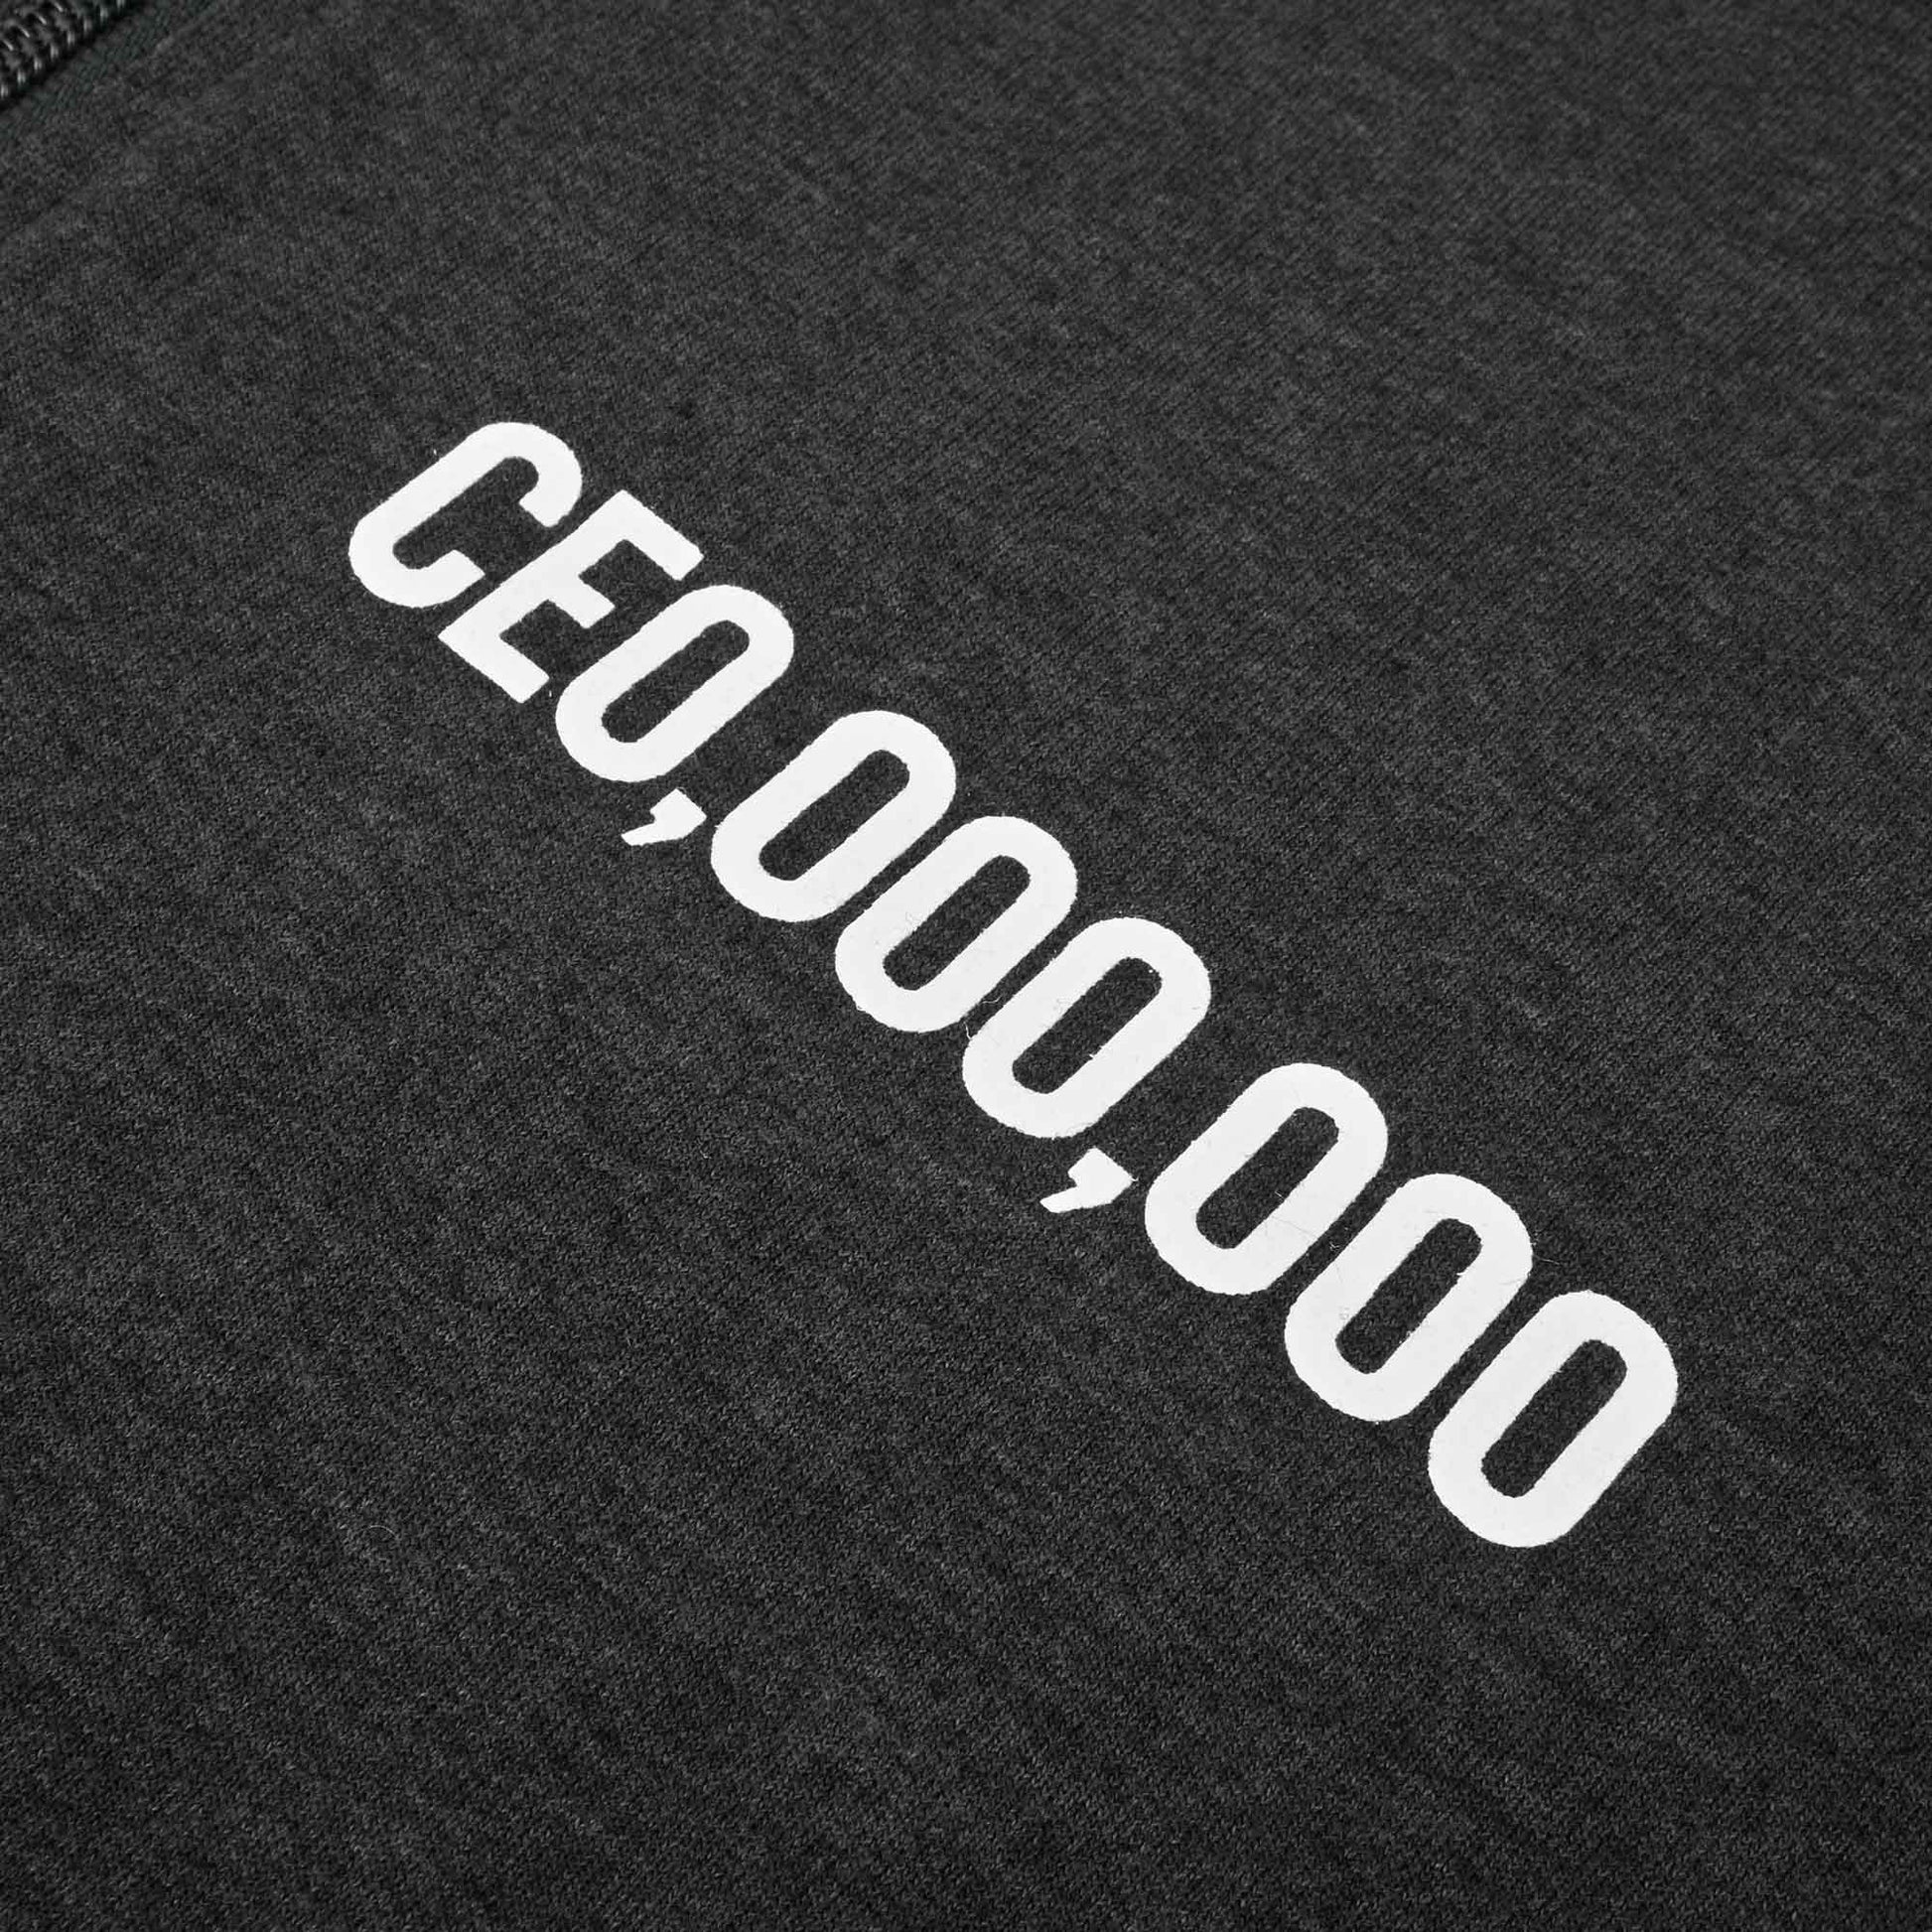 Polo Republica Men's CE000,000 Quarter-Zip Sweatshirt